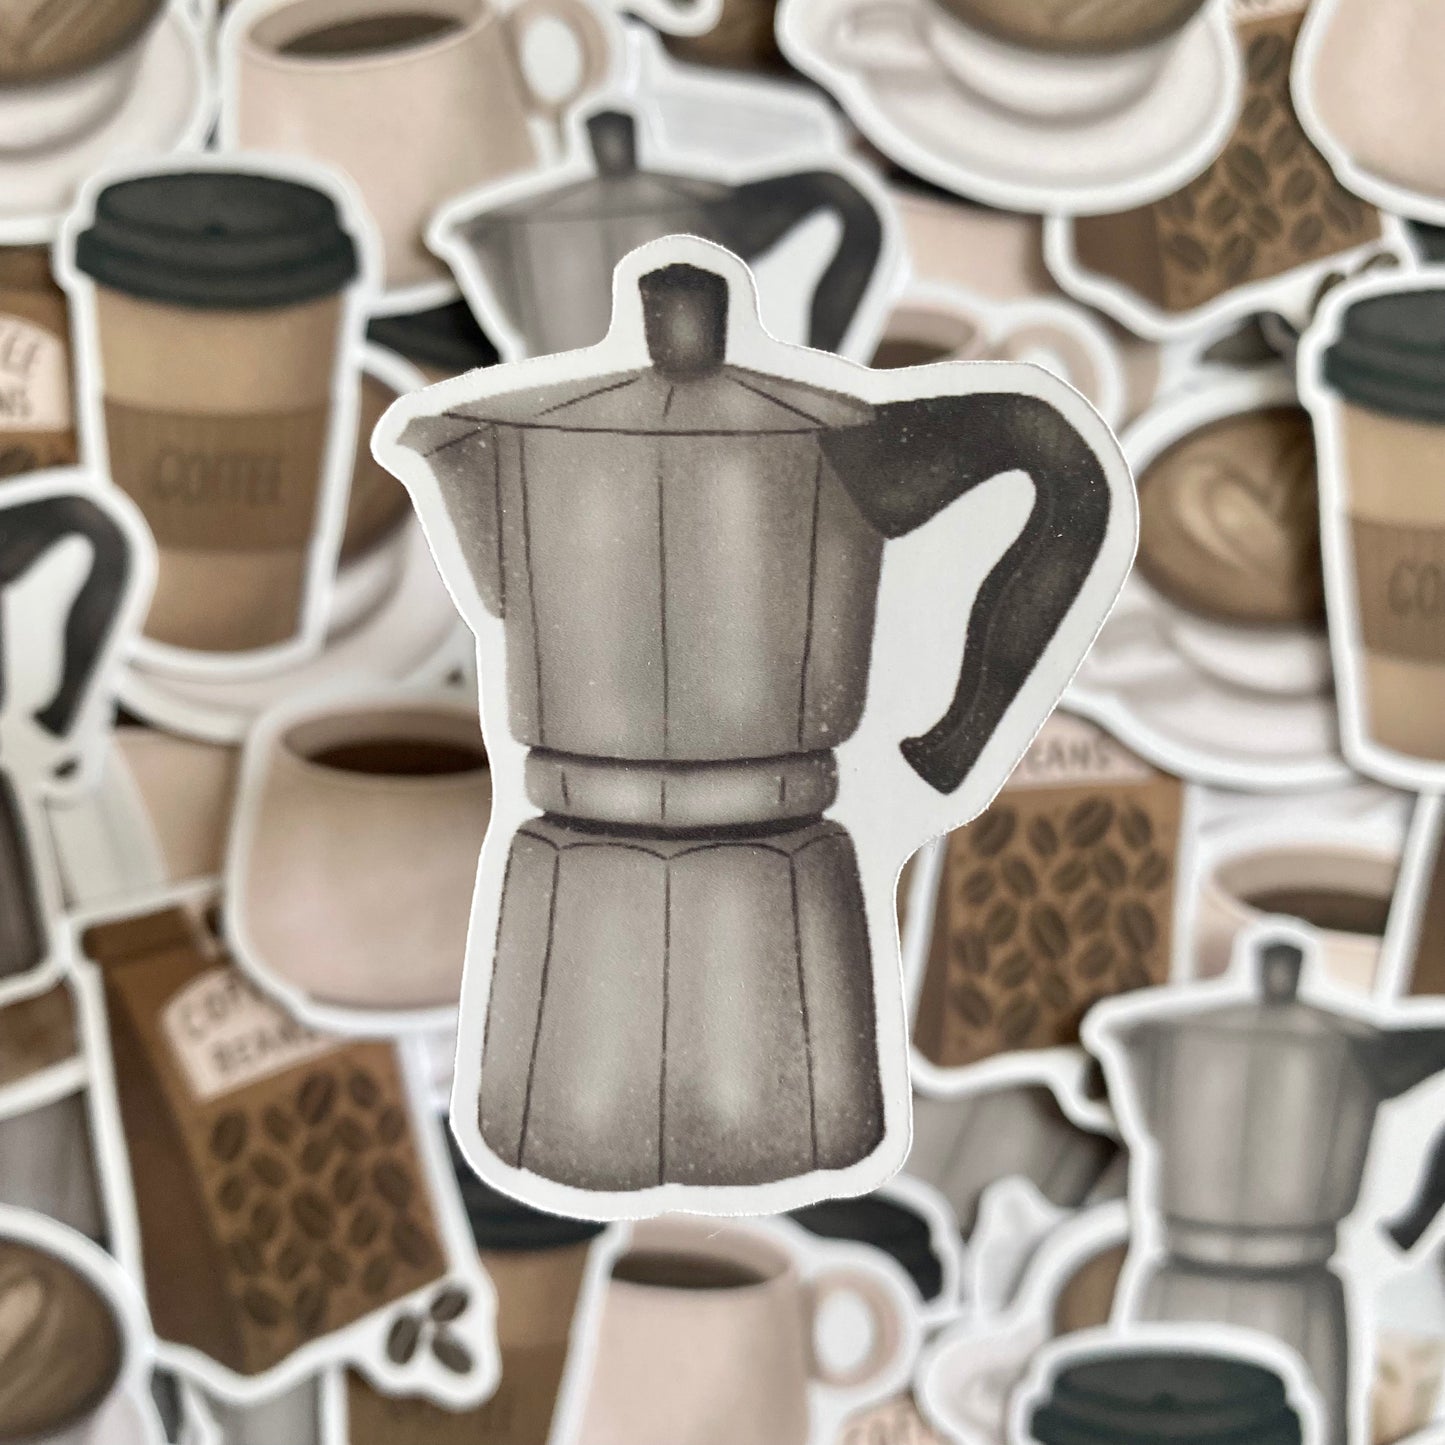 Coffee | sticker set of 6